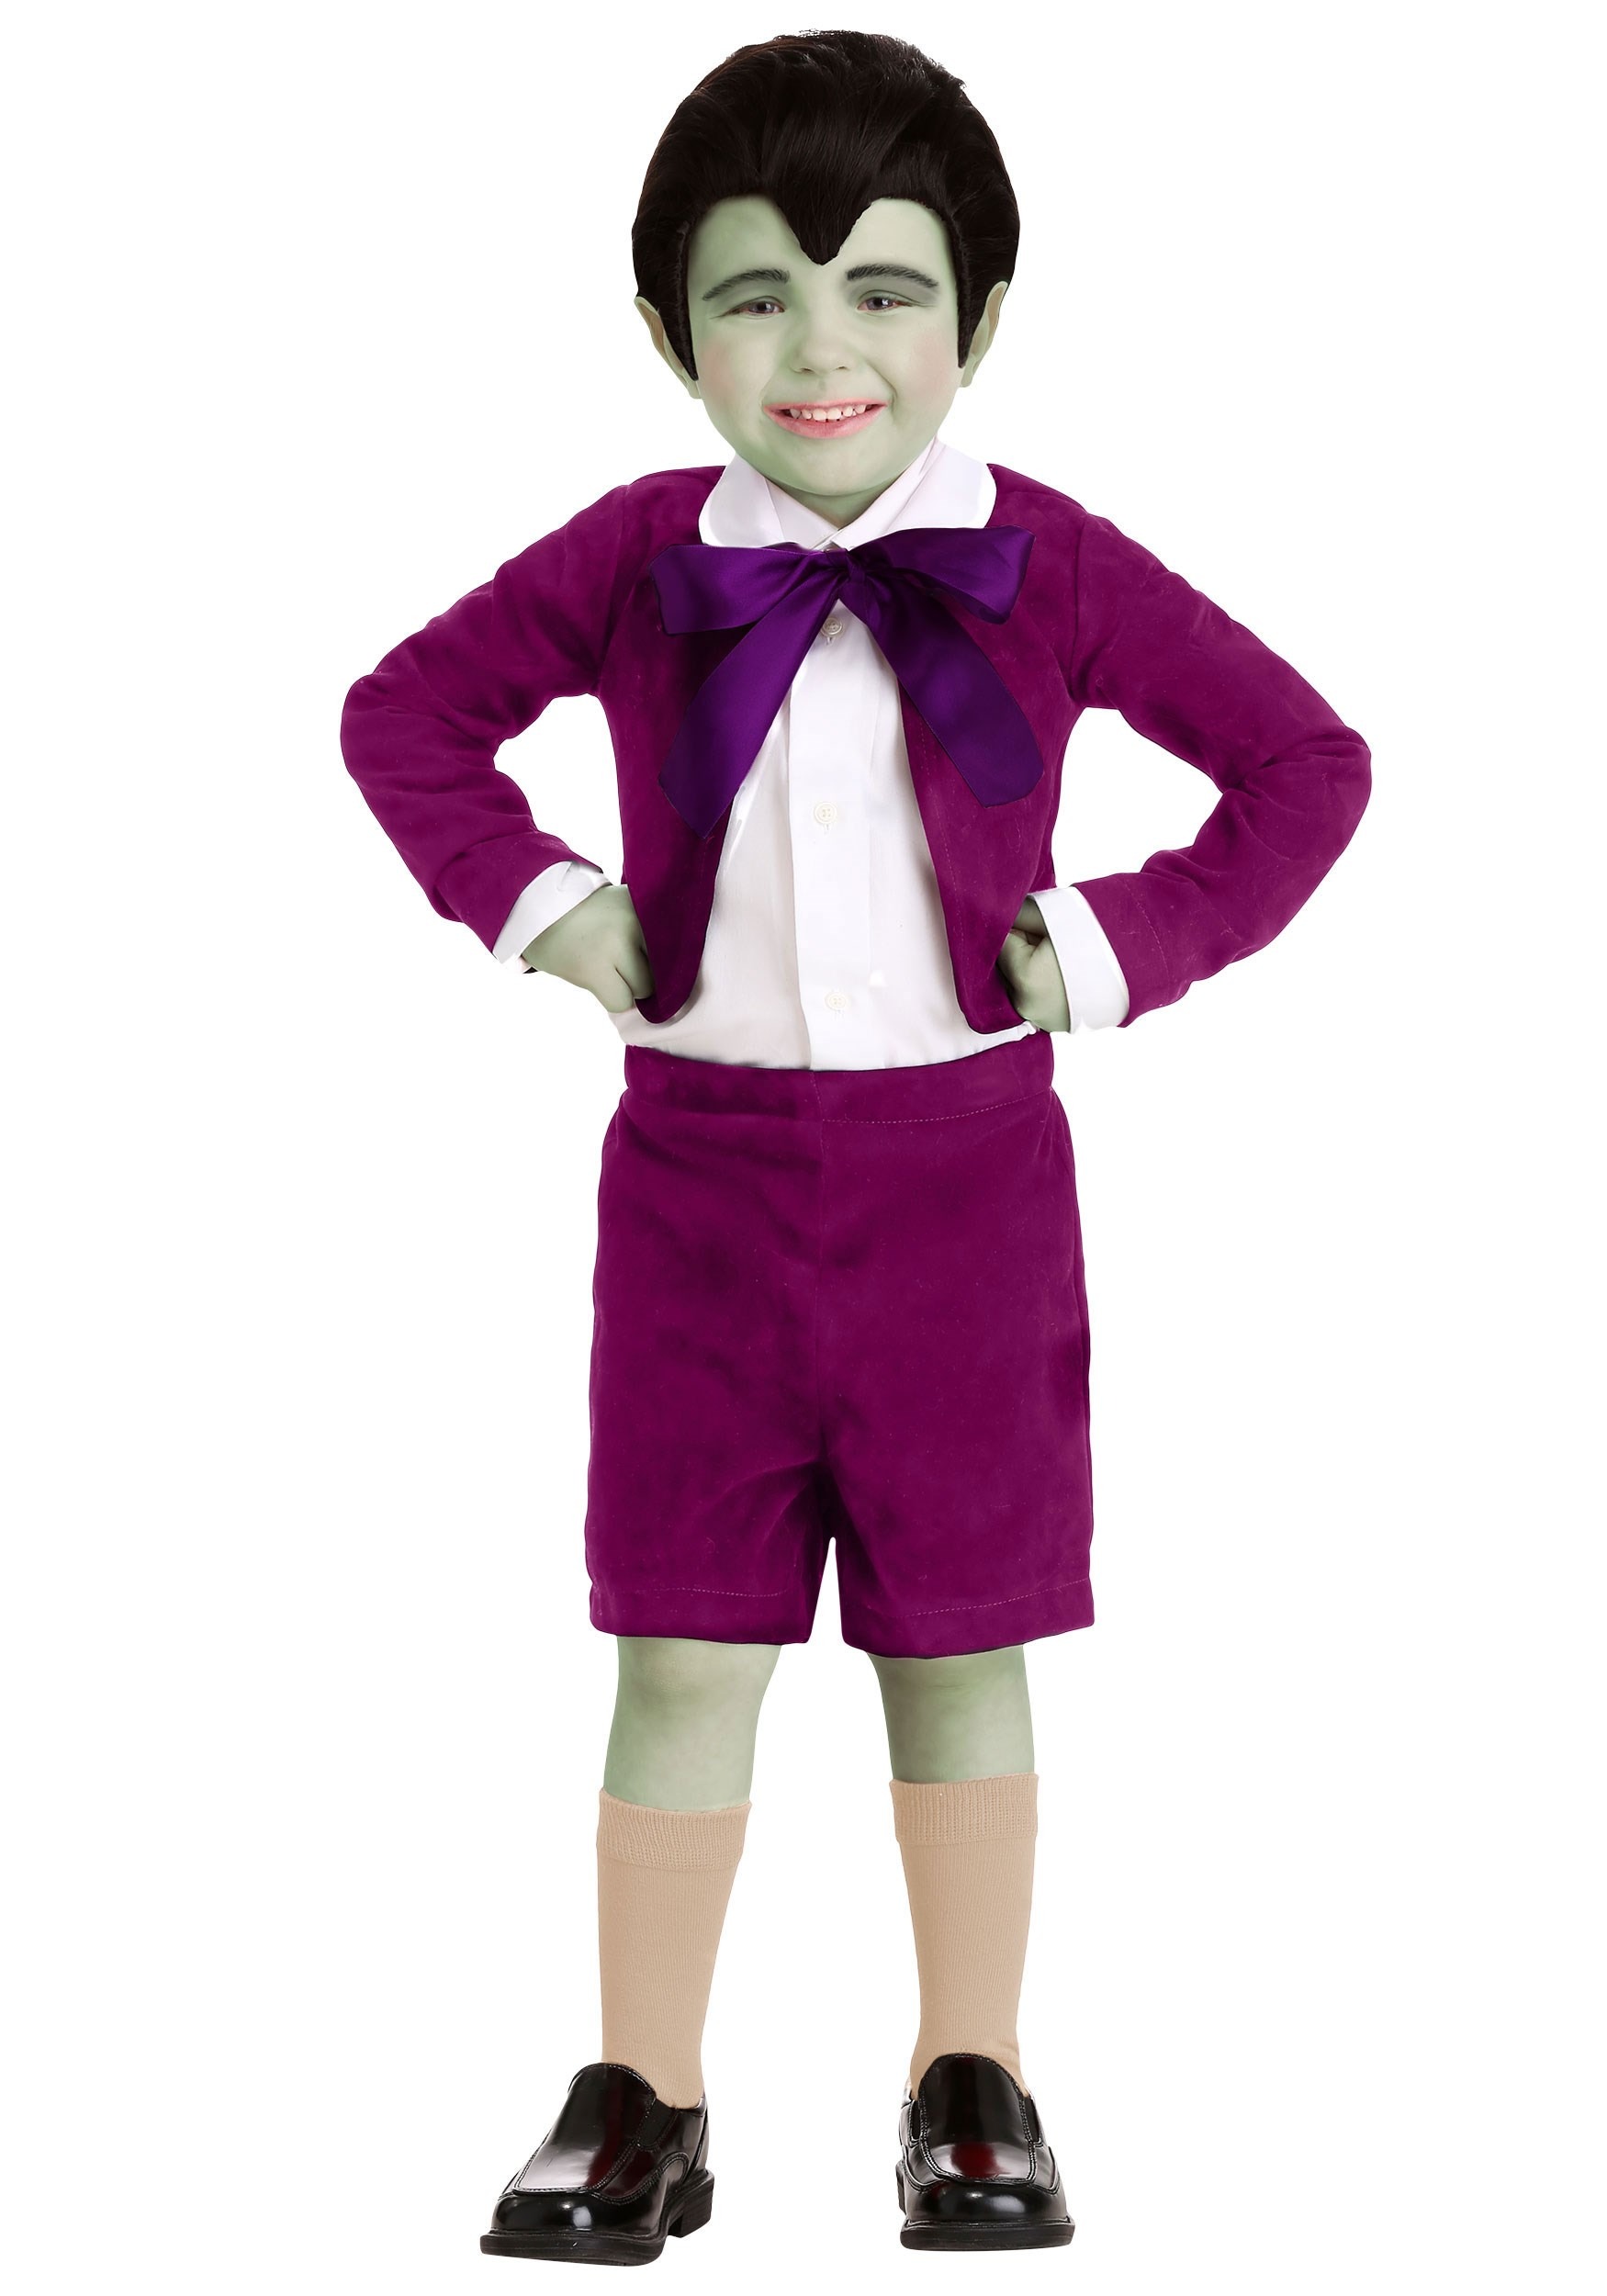 Photos - Fancy Dress Toddler FUN Costumes  Munsters Eddie Munster Costume Purple/White 